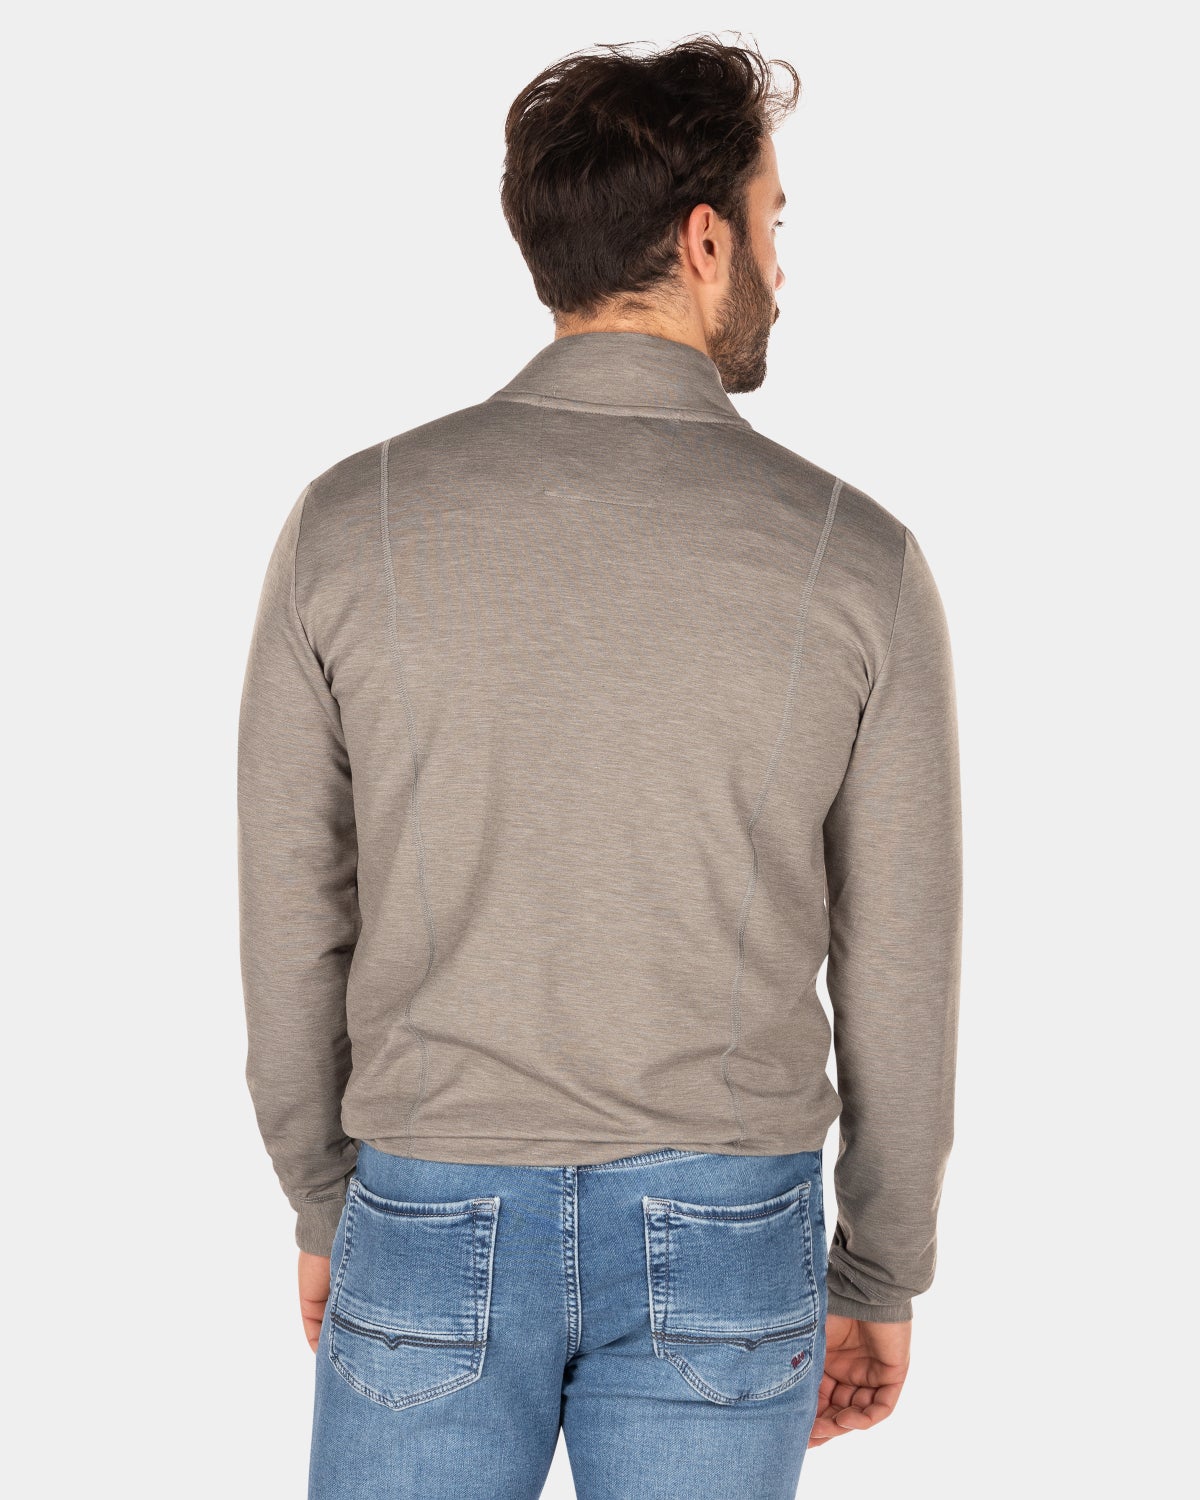 Half zip sweater - Misty Army